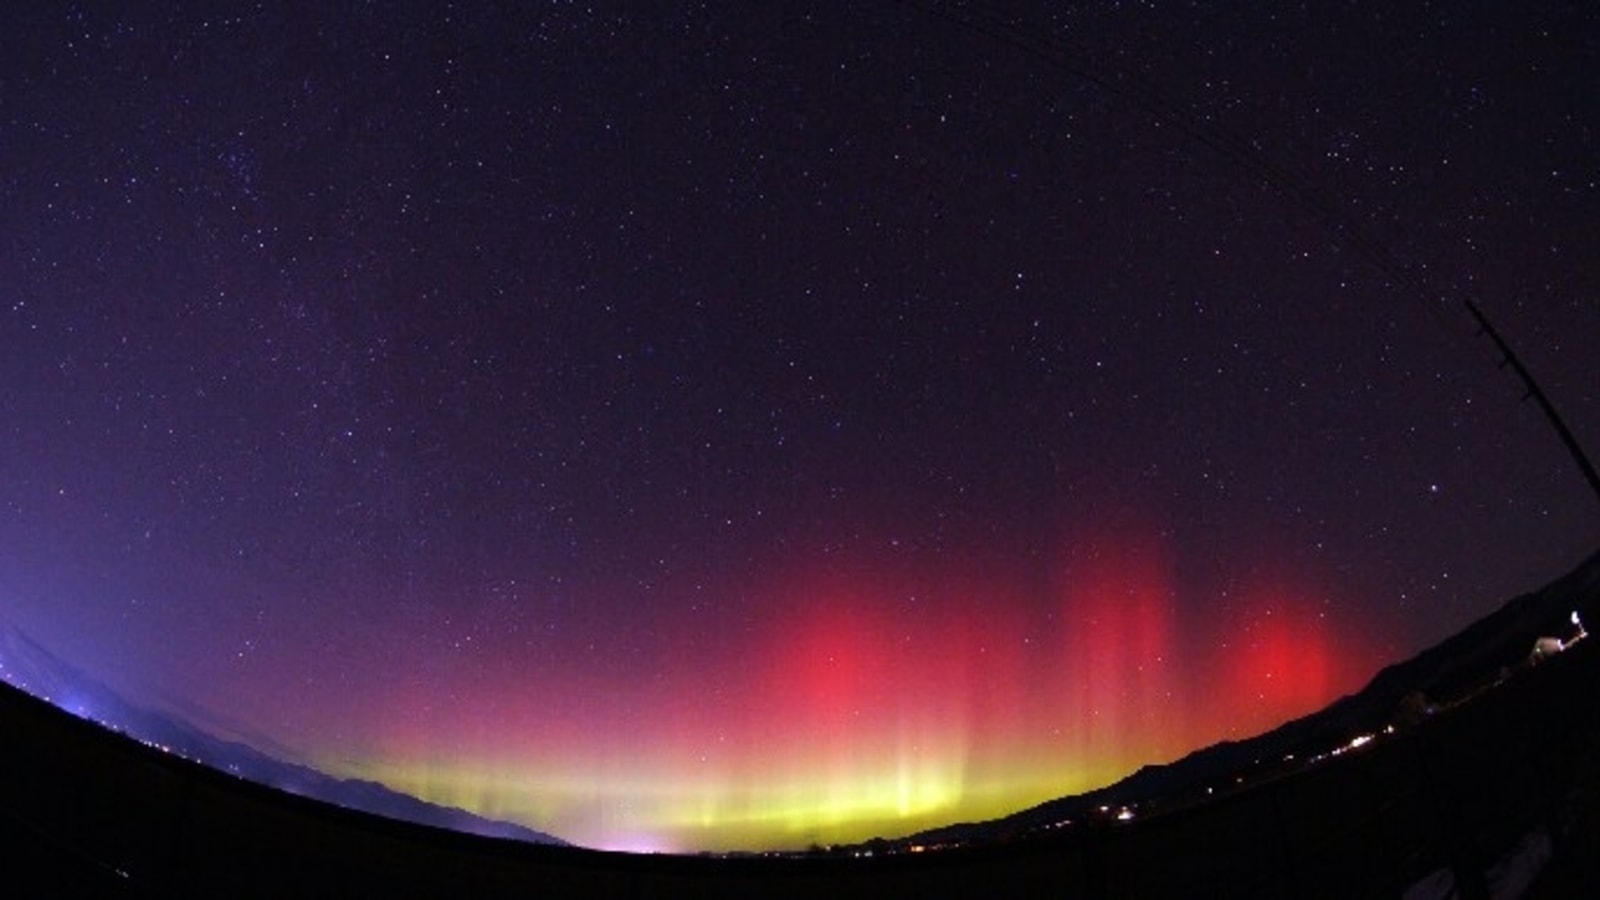 Geomagnetic storm slams into Earth, triggering vivid Northern Lights display